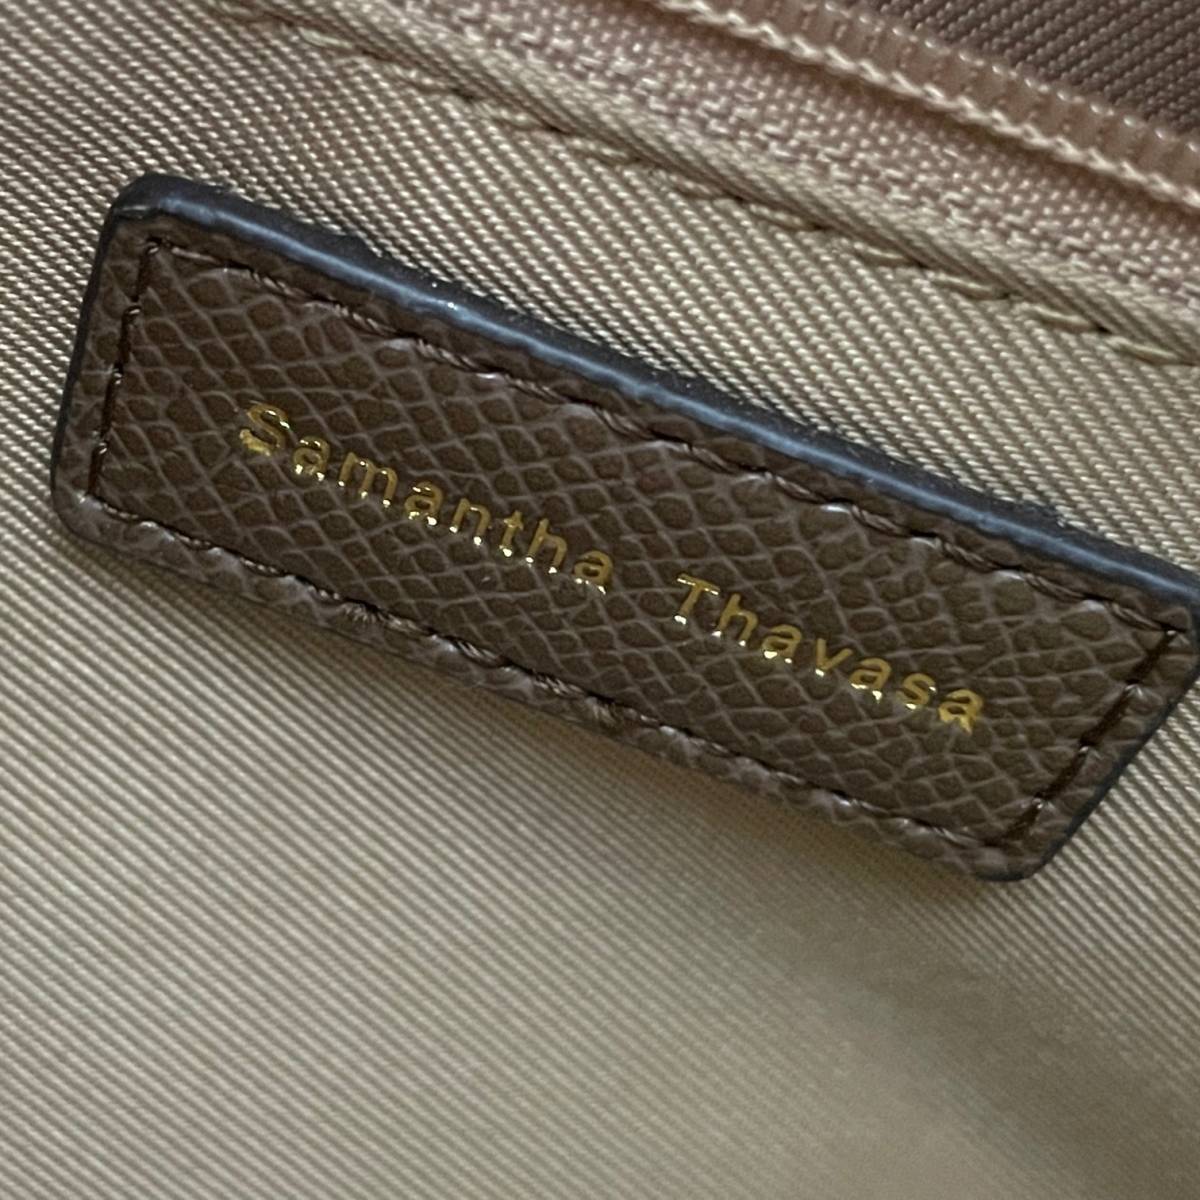  secondhand goods Samantha Thavasa tote bag shoulder bag Samantha Thavasa She's series handbag 